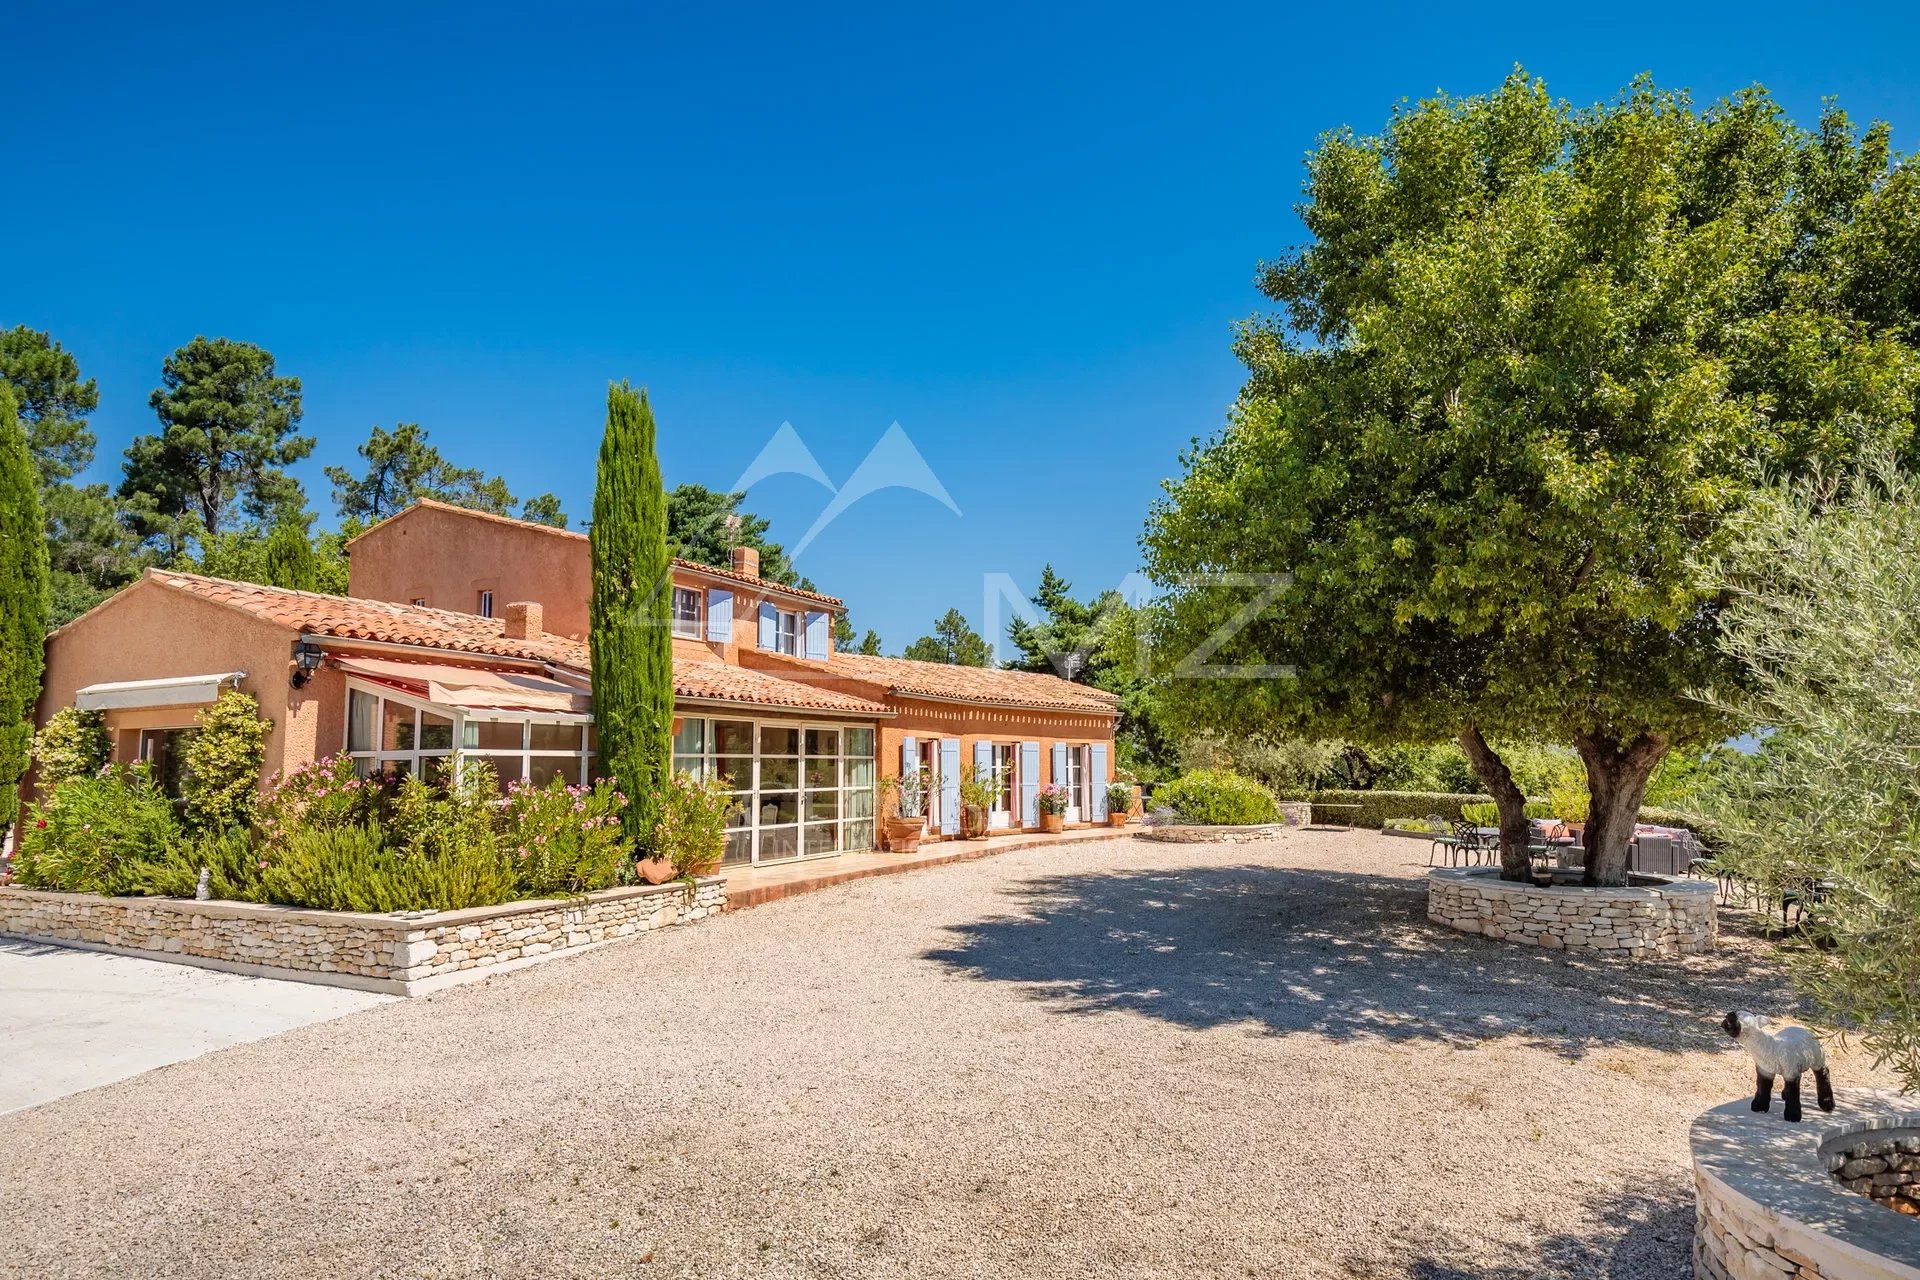 Roussillon - Beautiful villa in a wonderful environment